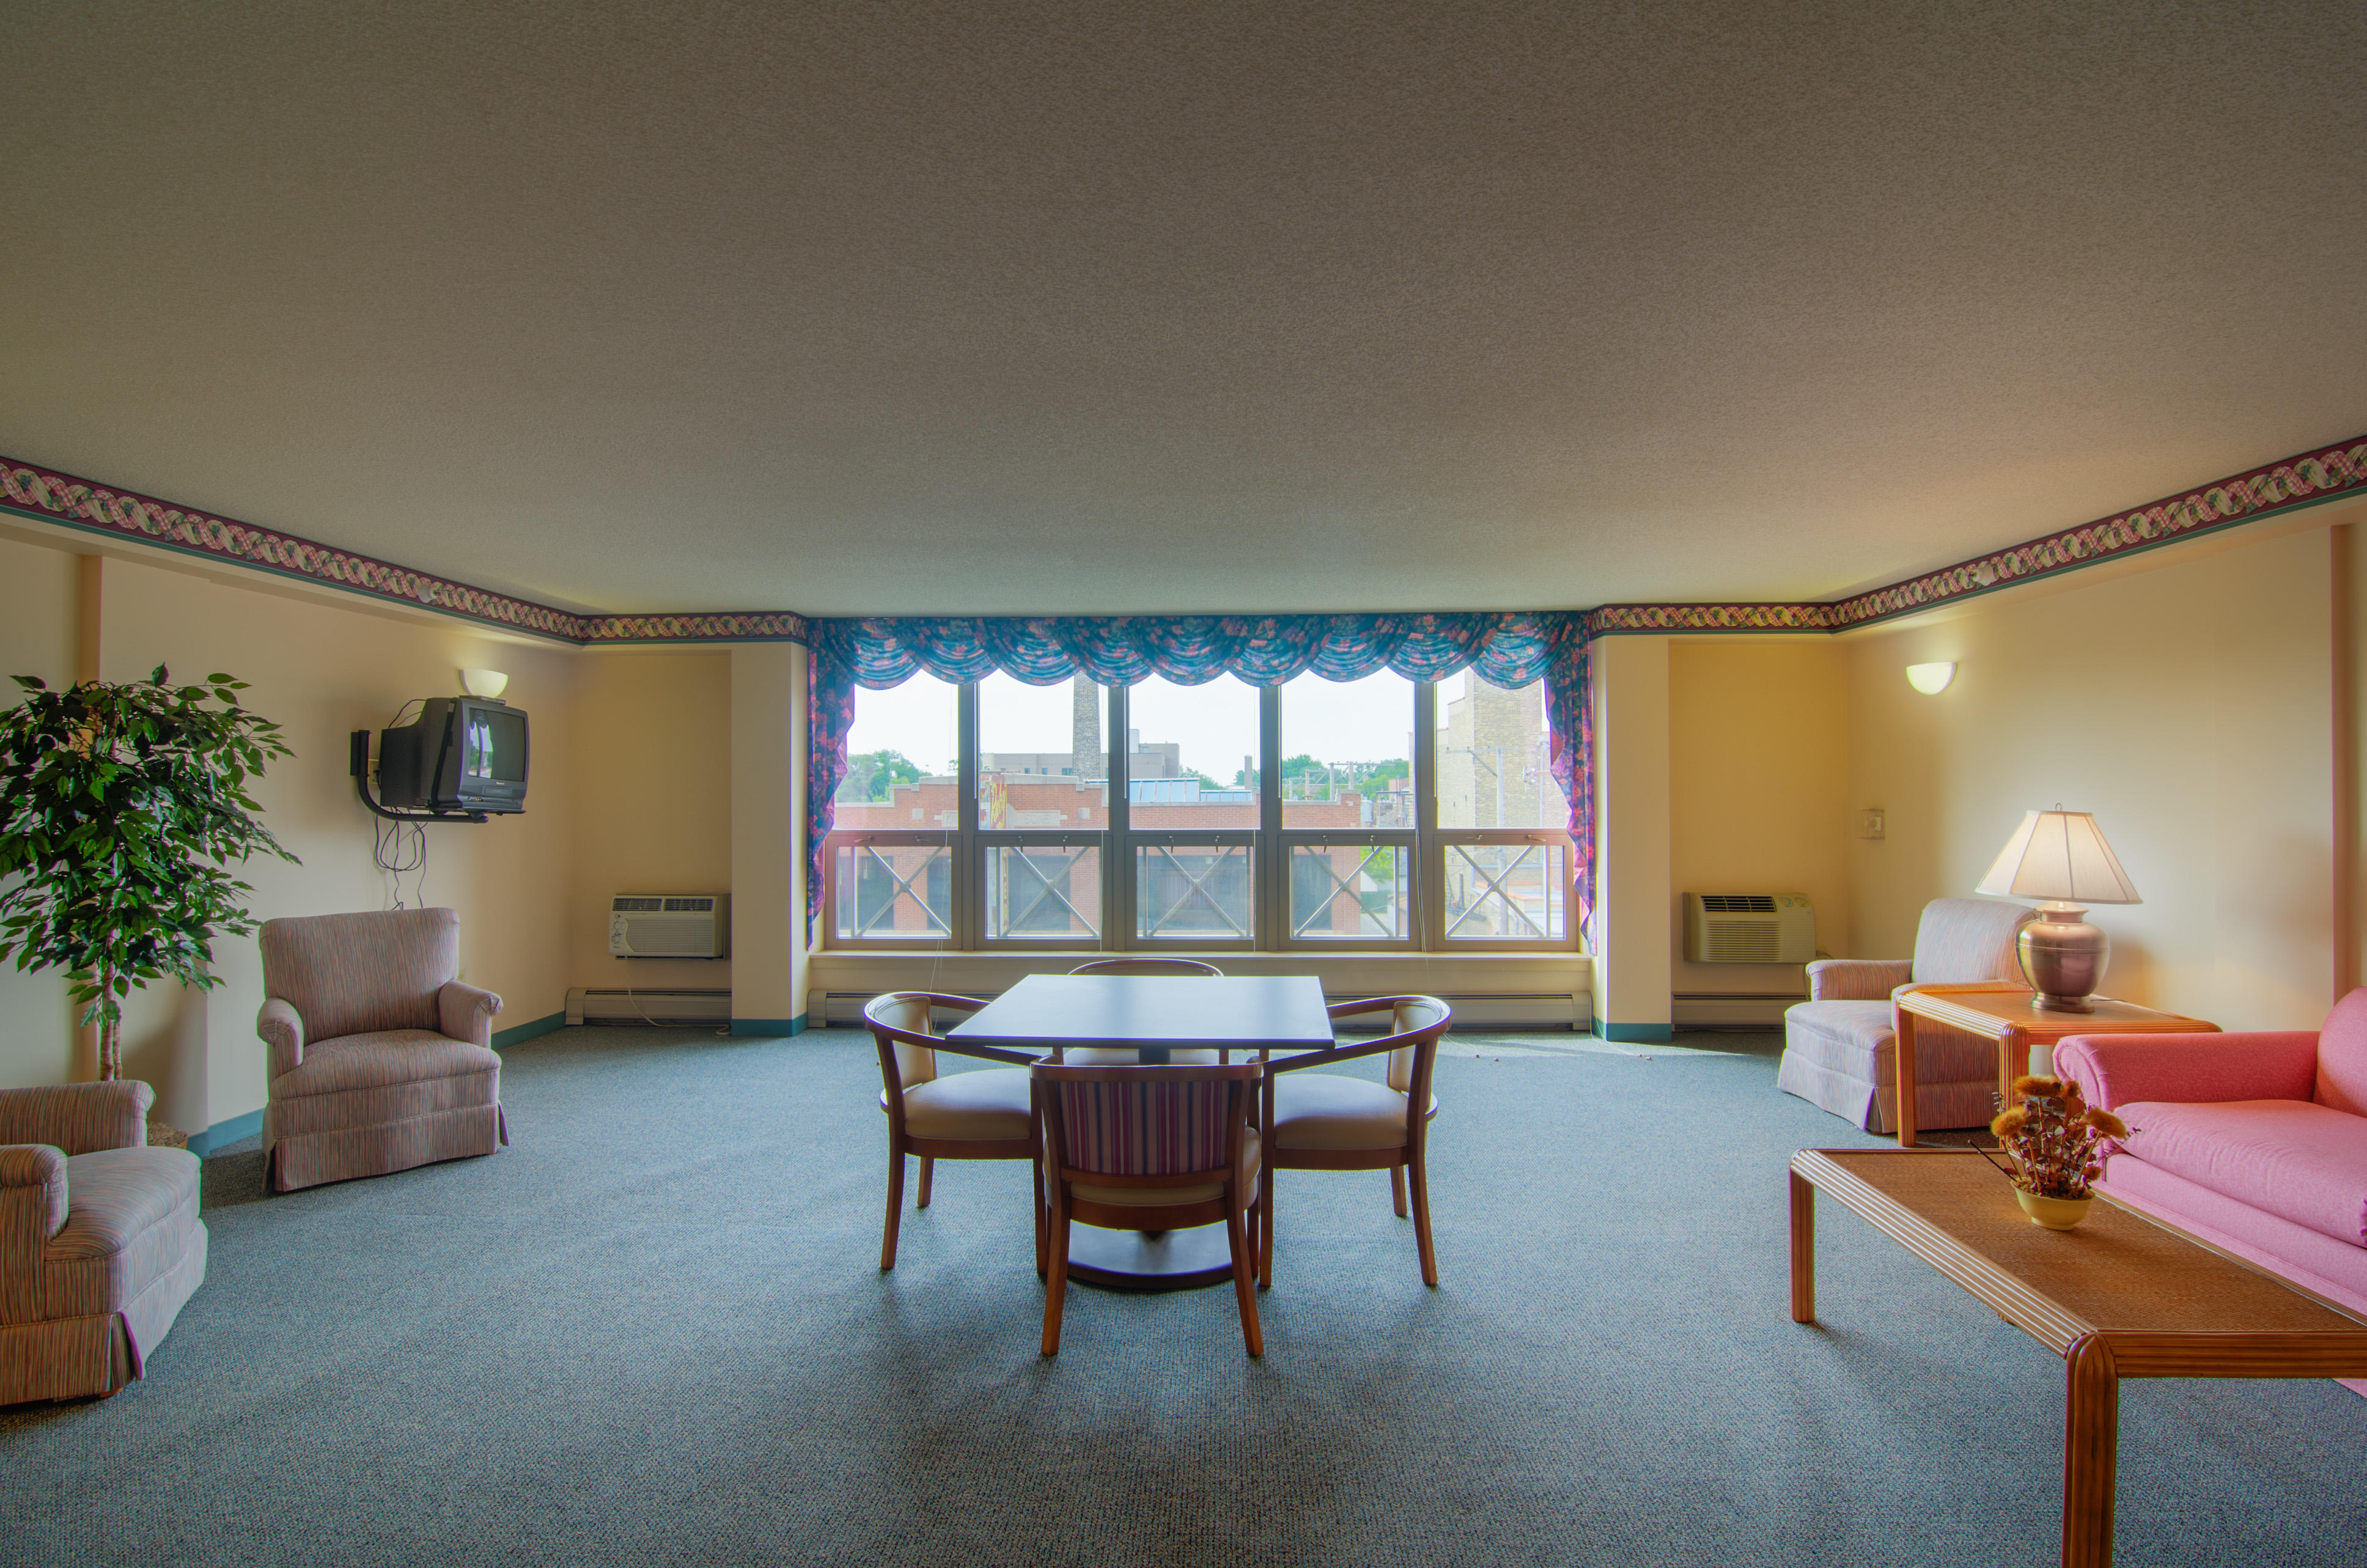 Senior Suites of Ravenswood Manor Photo